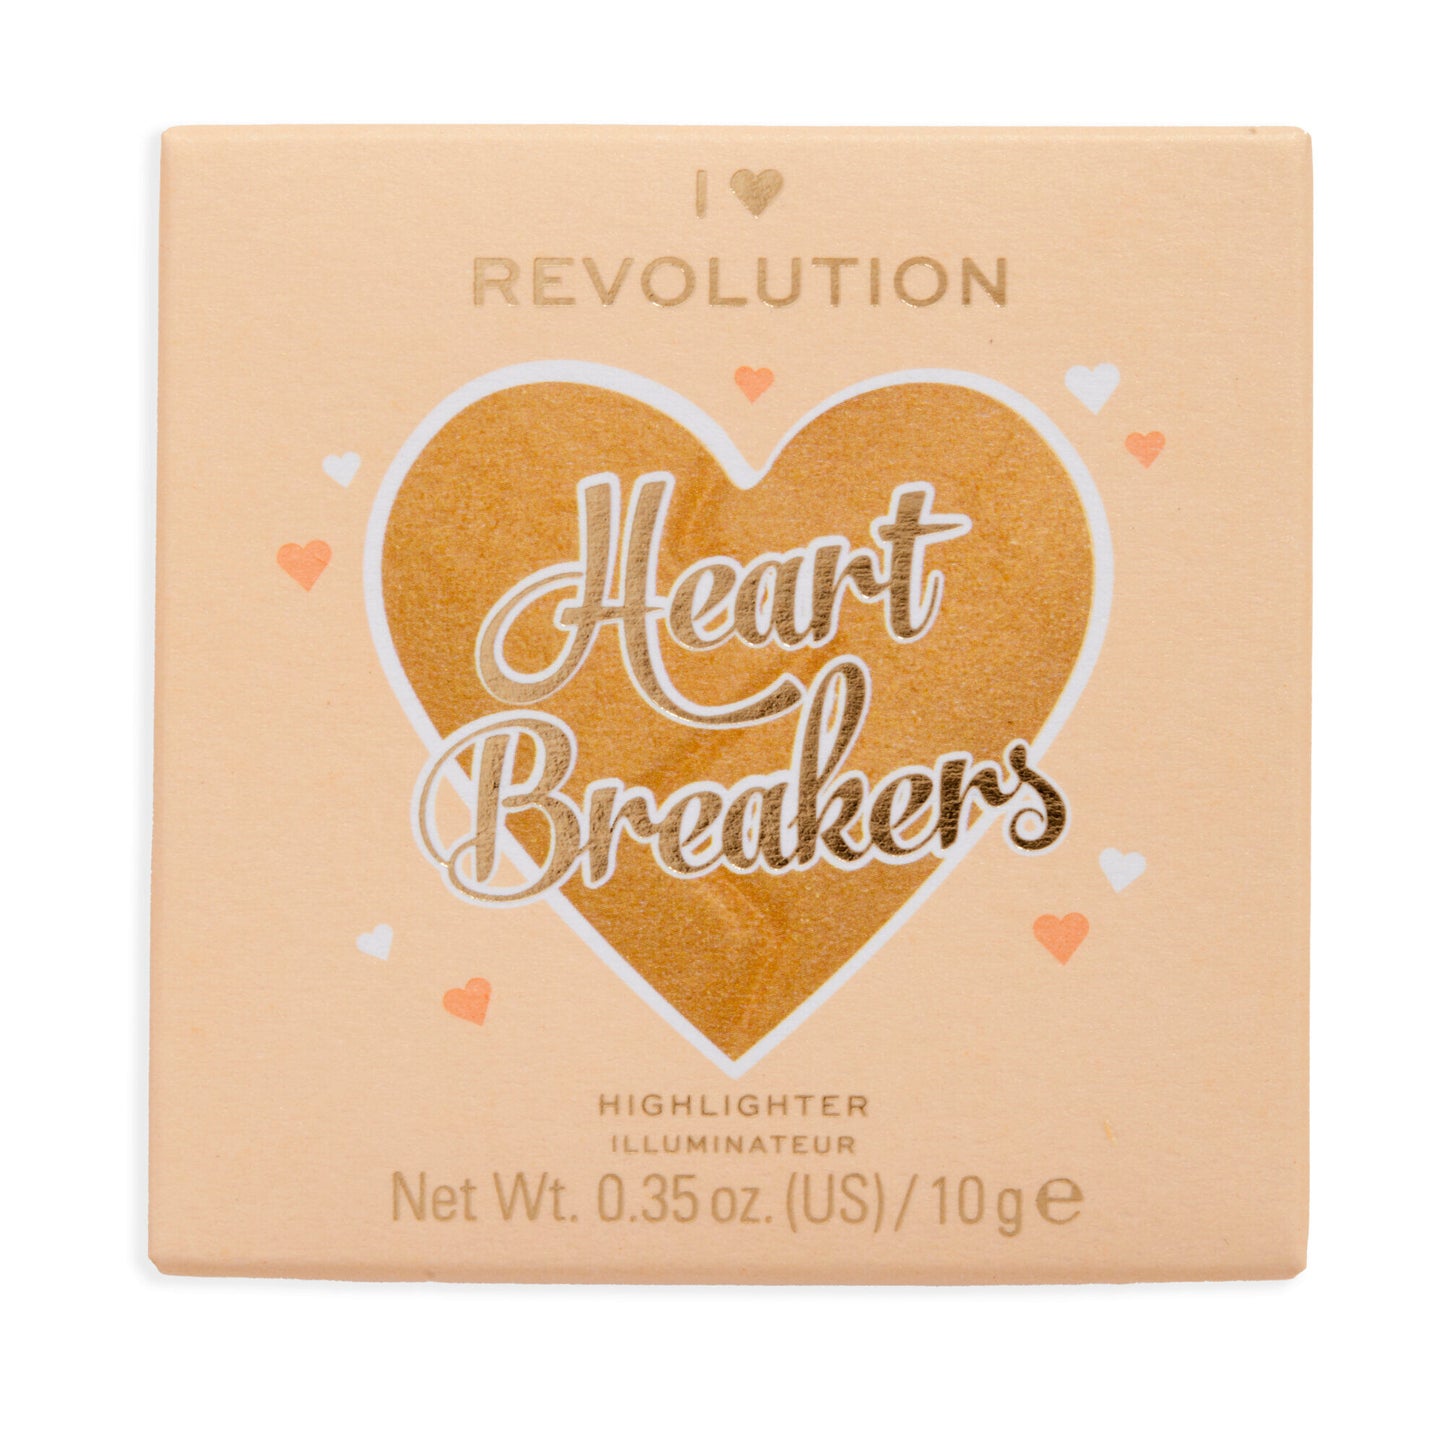 Revolution I Heart Revolution Heart Breakers Highlighter Golden